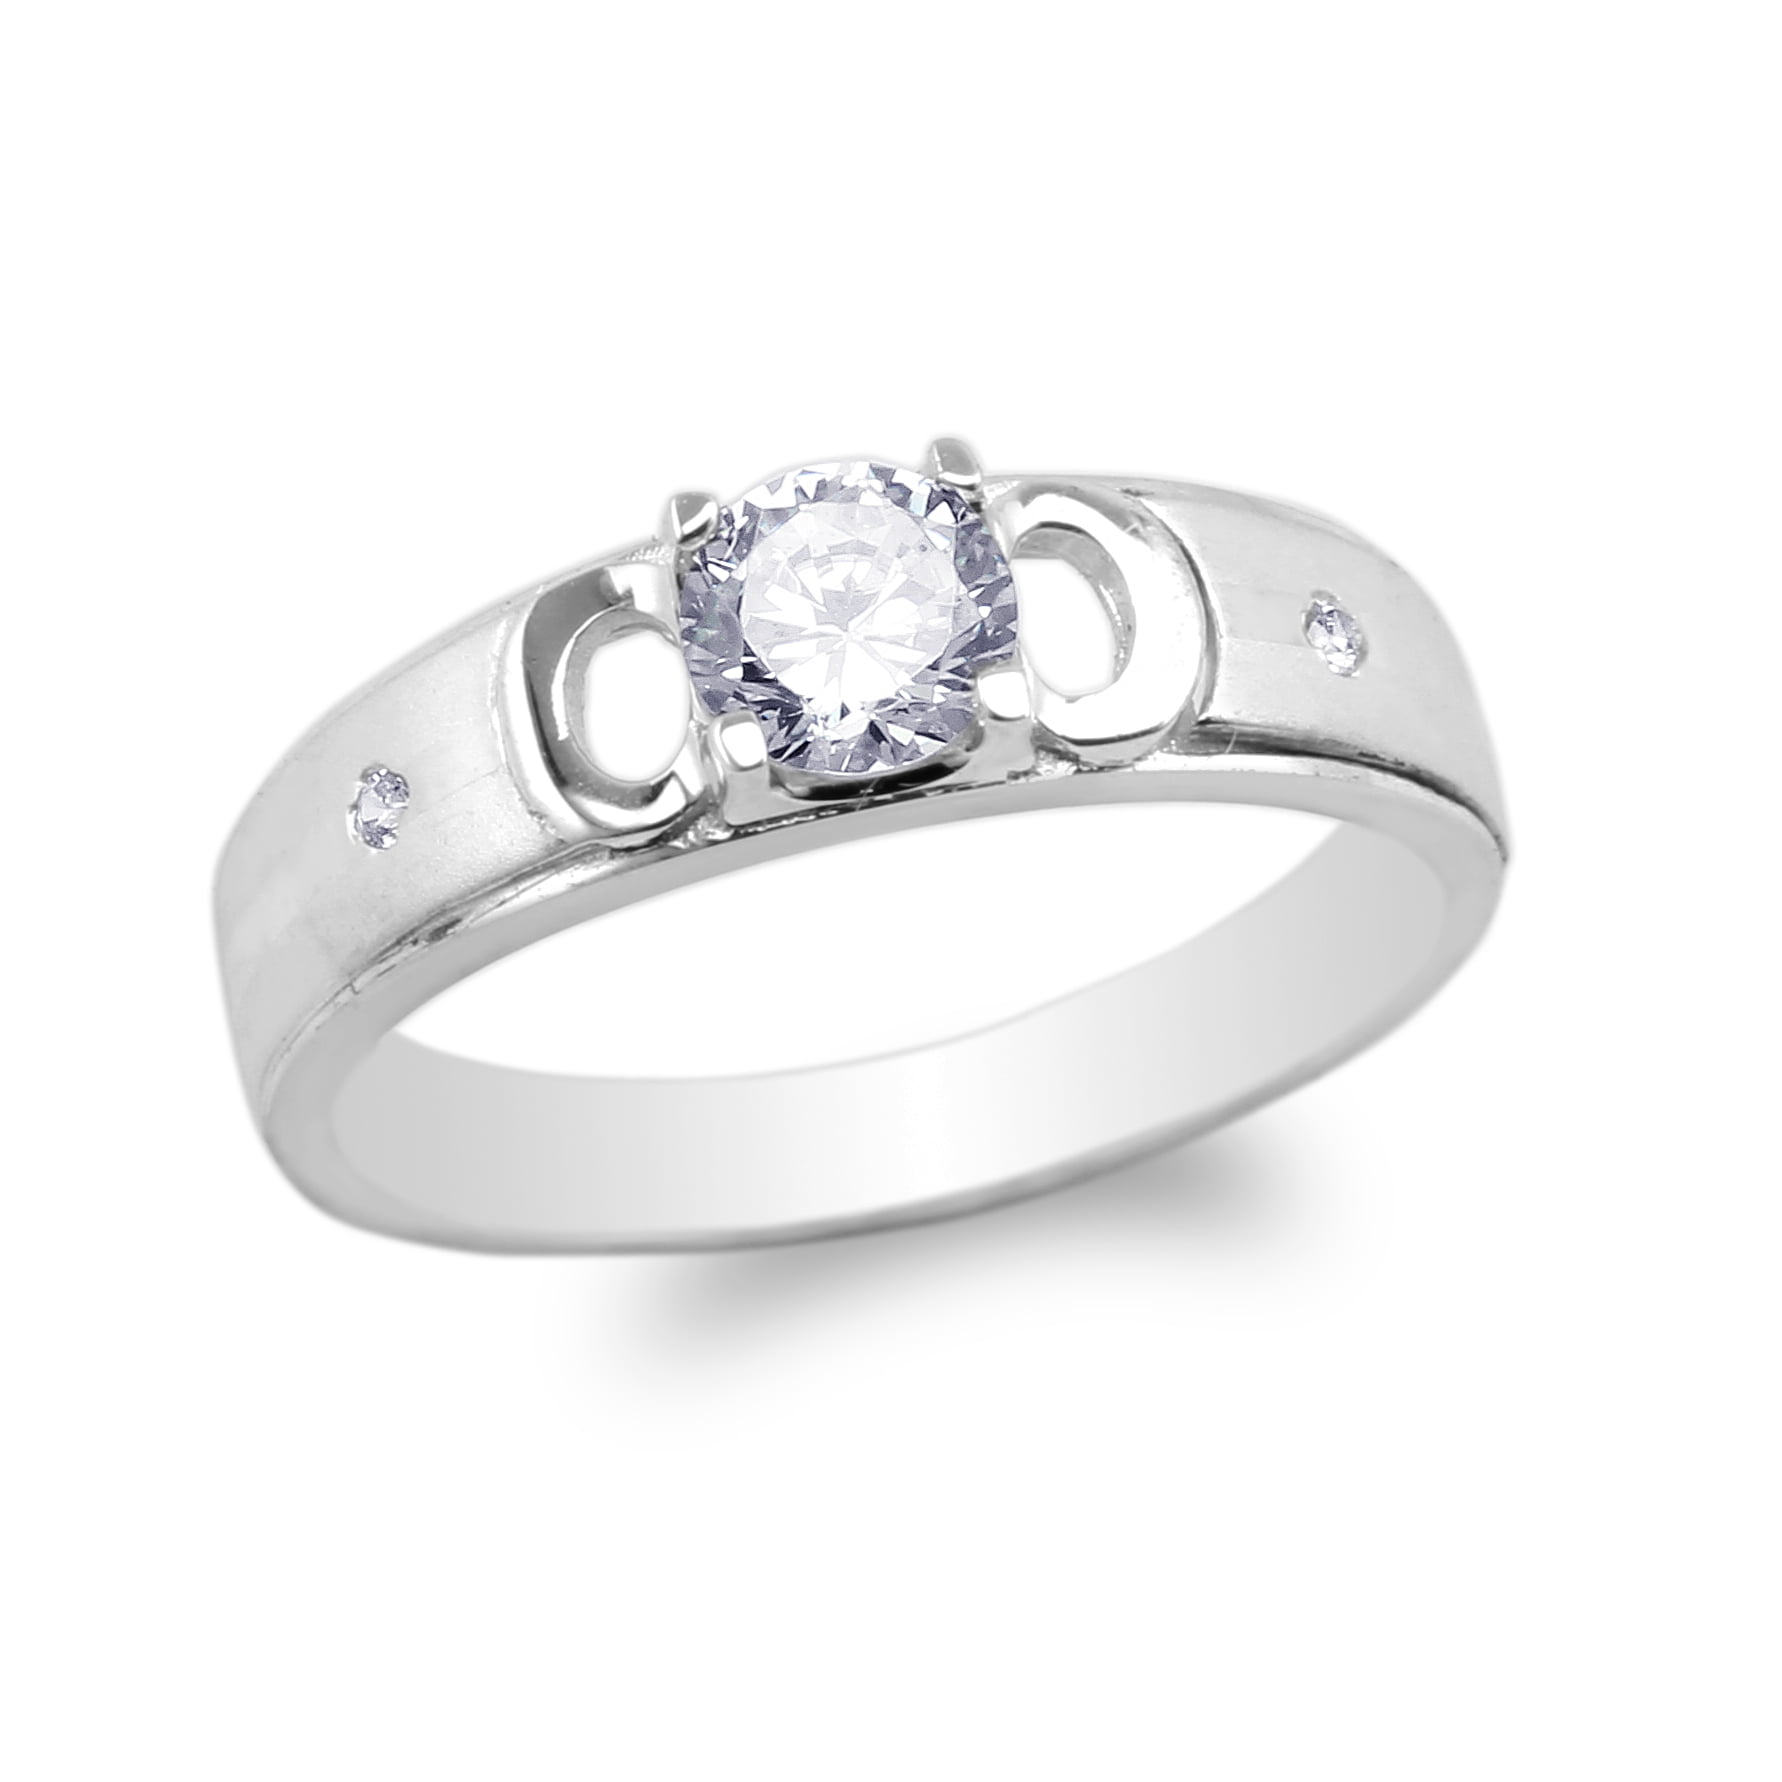 JamesJenny Ladies 14K Yellow Gold Round CZ Engagement /& Wedding Band Ring Size 4-10